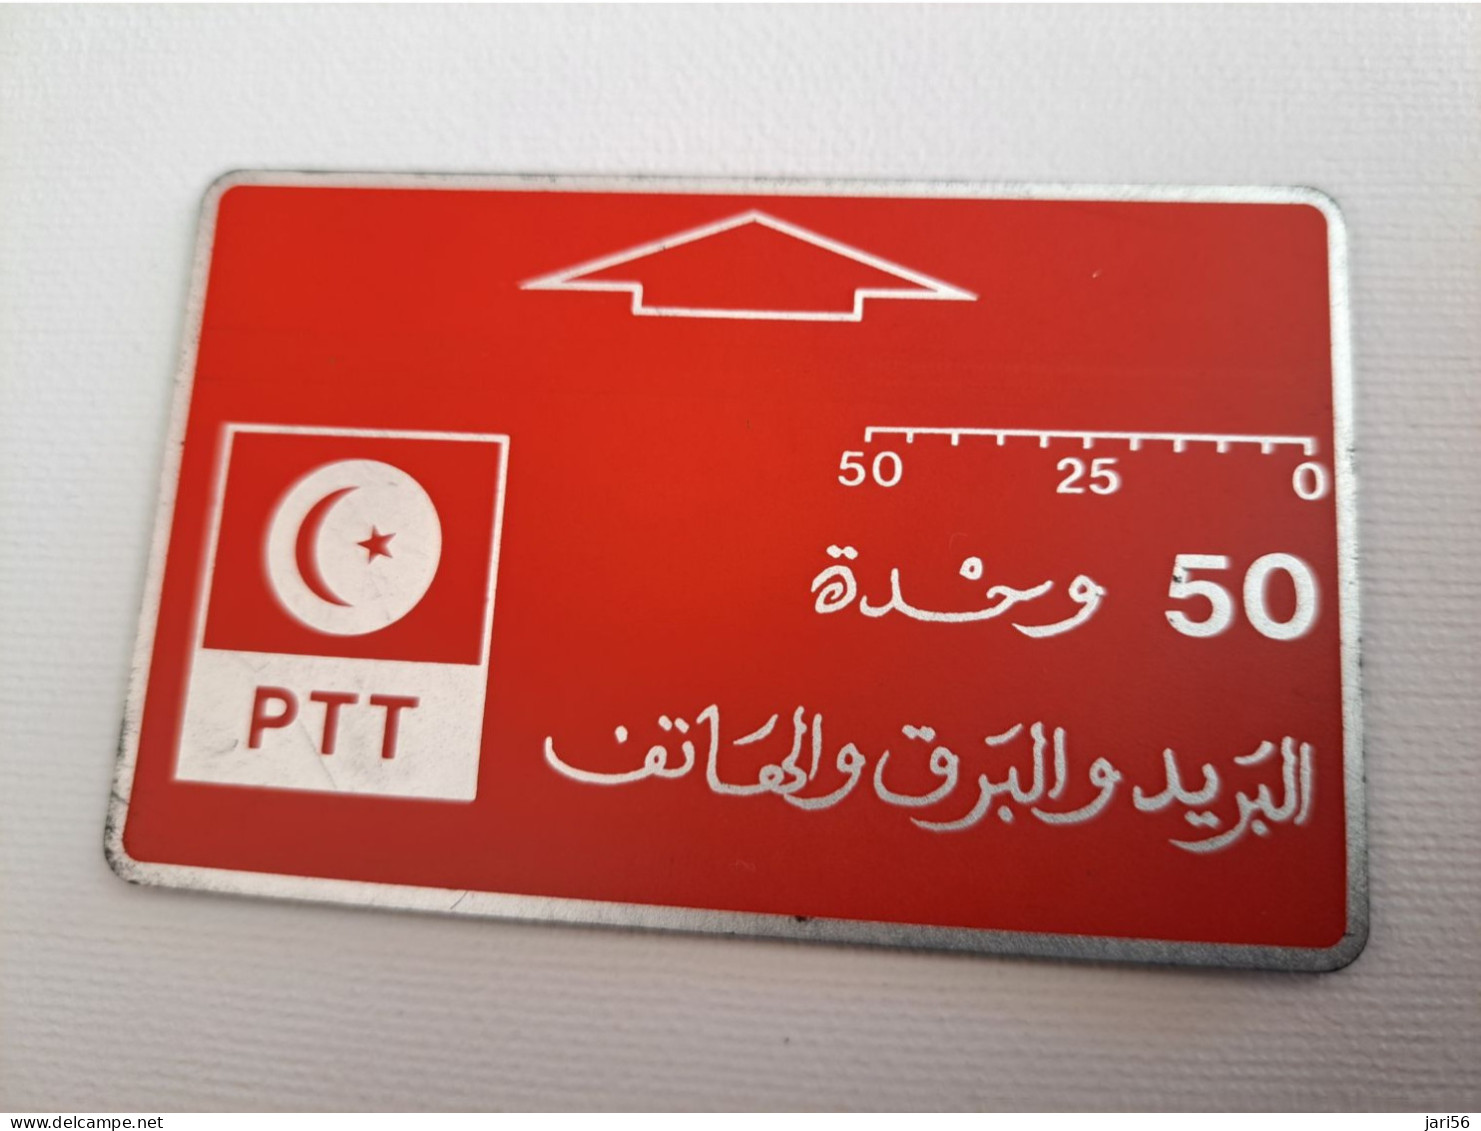 TUNESIA   L&G CARD 50 UNITS /NO NOTCH/ FIRST ISSUE / T10G /     MINT CARD     ** 13518** - Tunesië